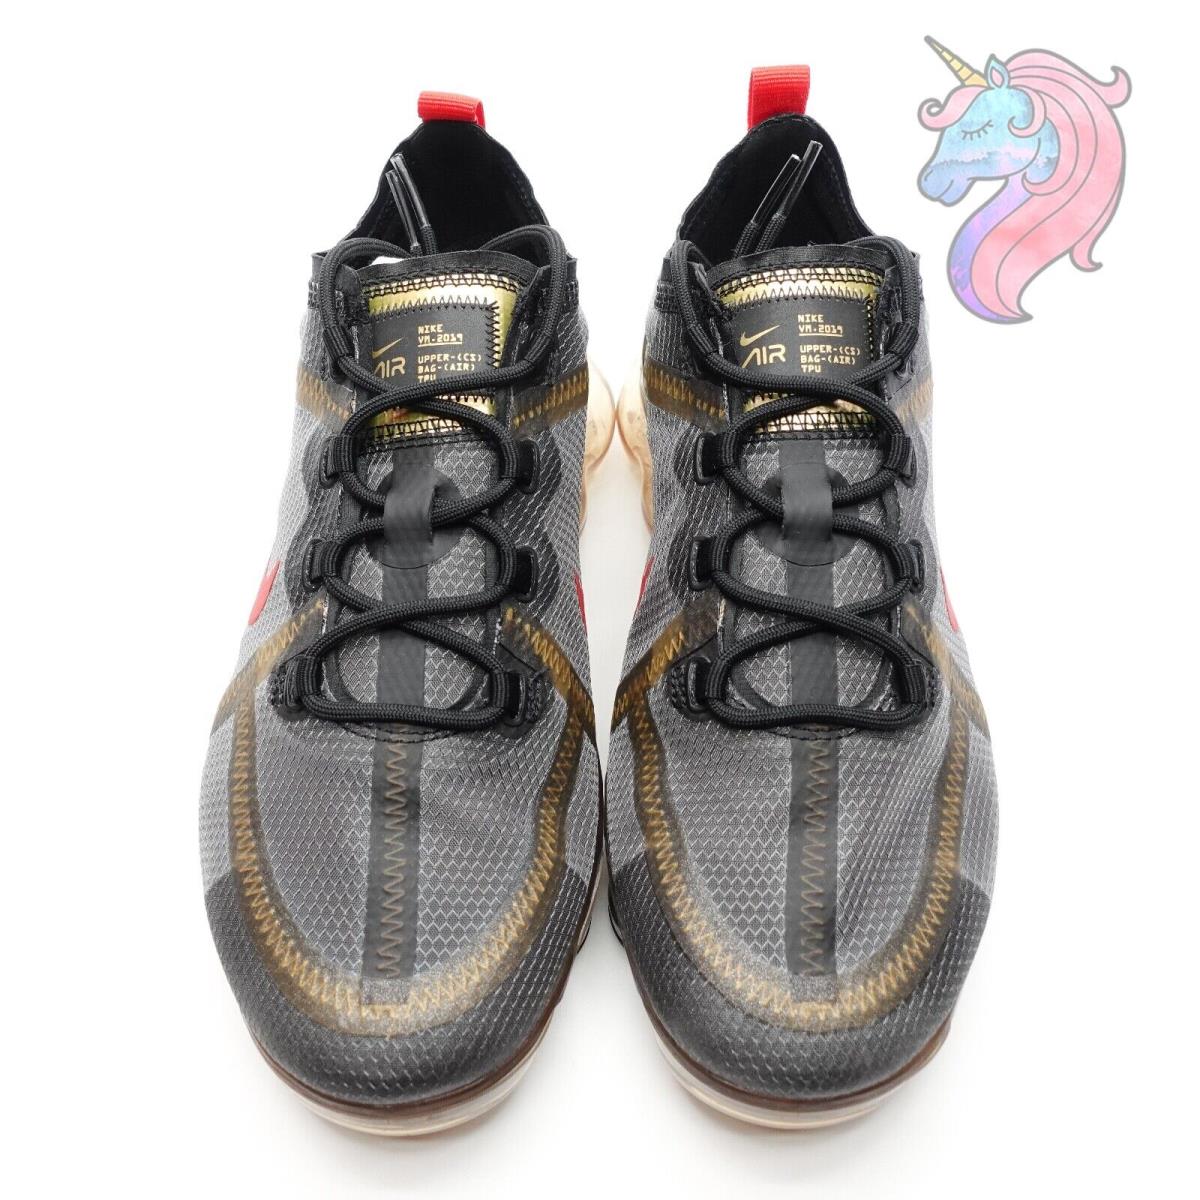 Nike shoes Air Vapormax - Black / Metallic Gold 4